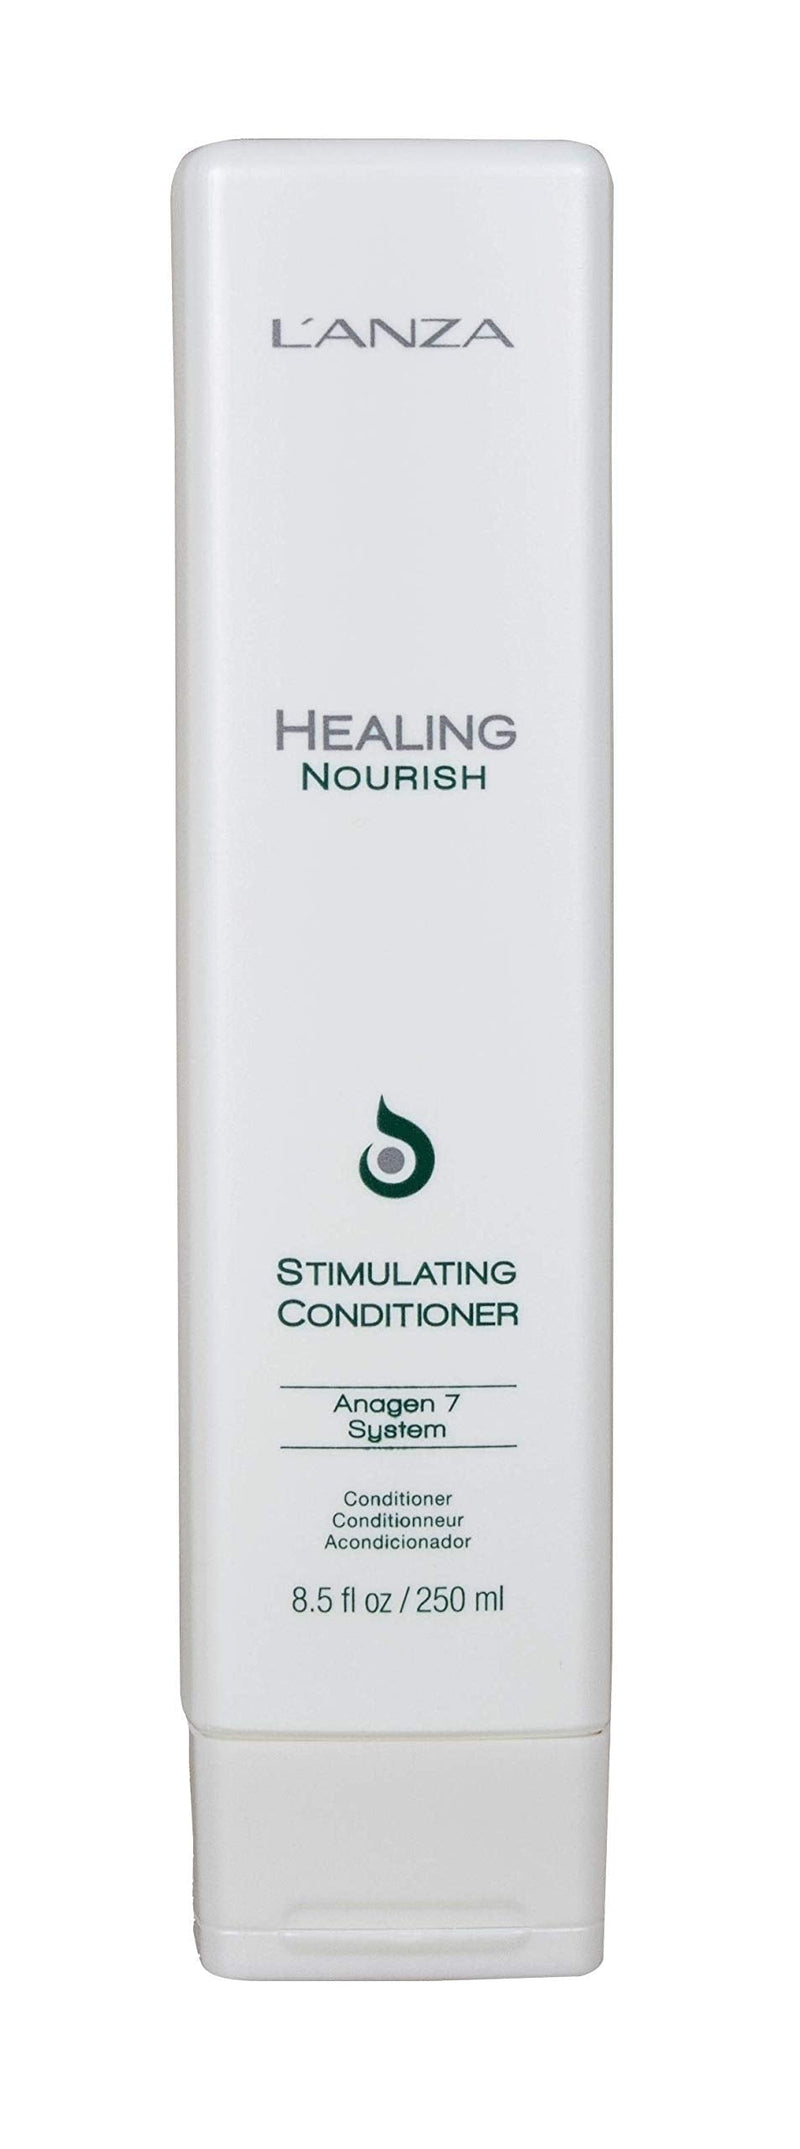 [Australia] - L'ANZA Healing Nourish Stimulating Conditioner, 250 ml 